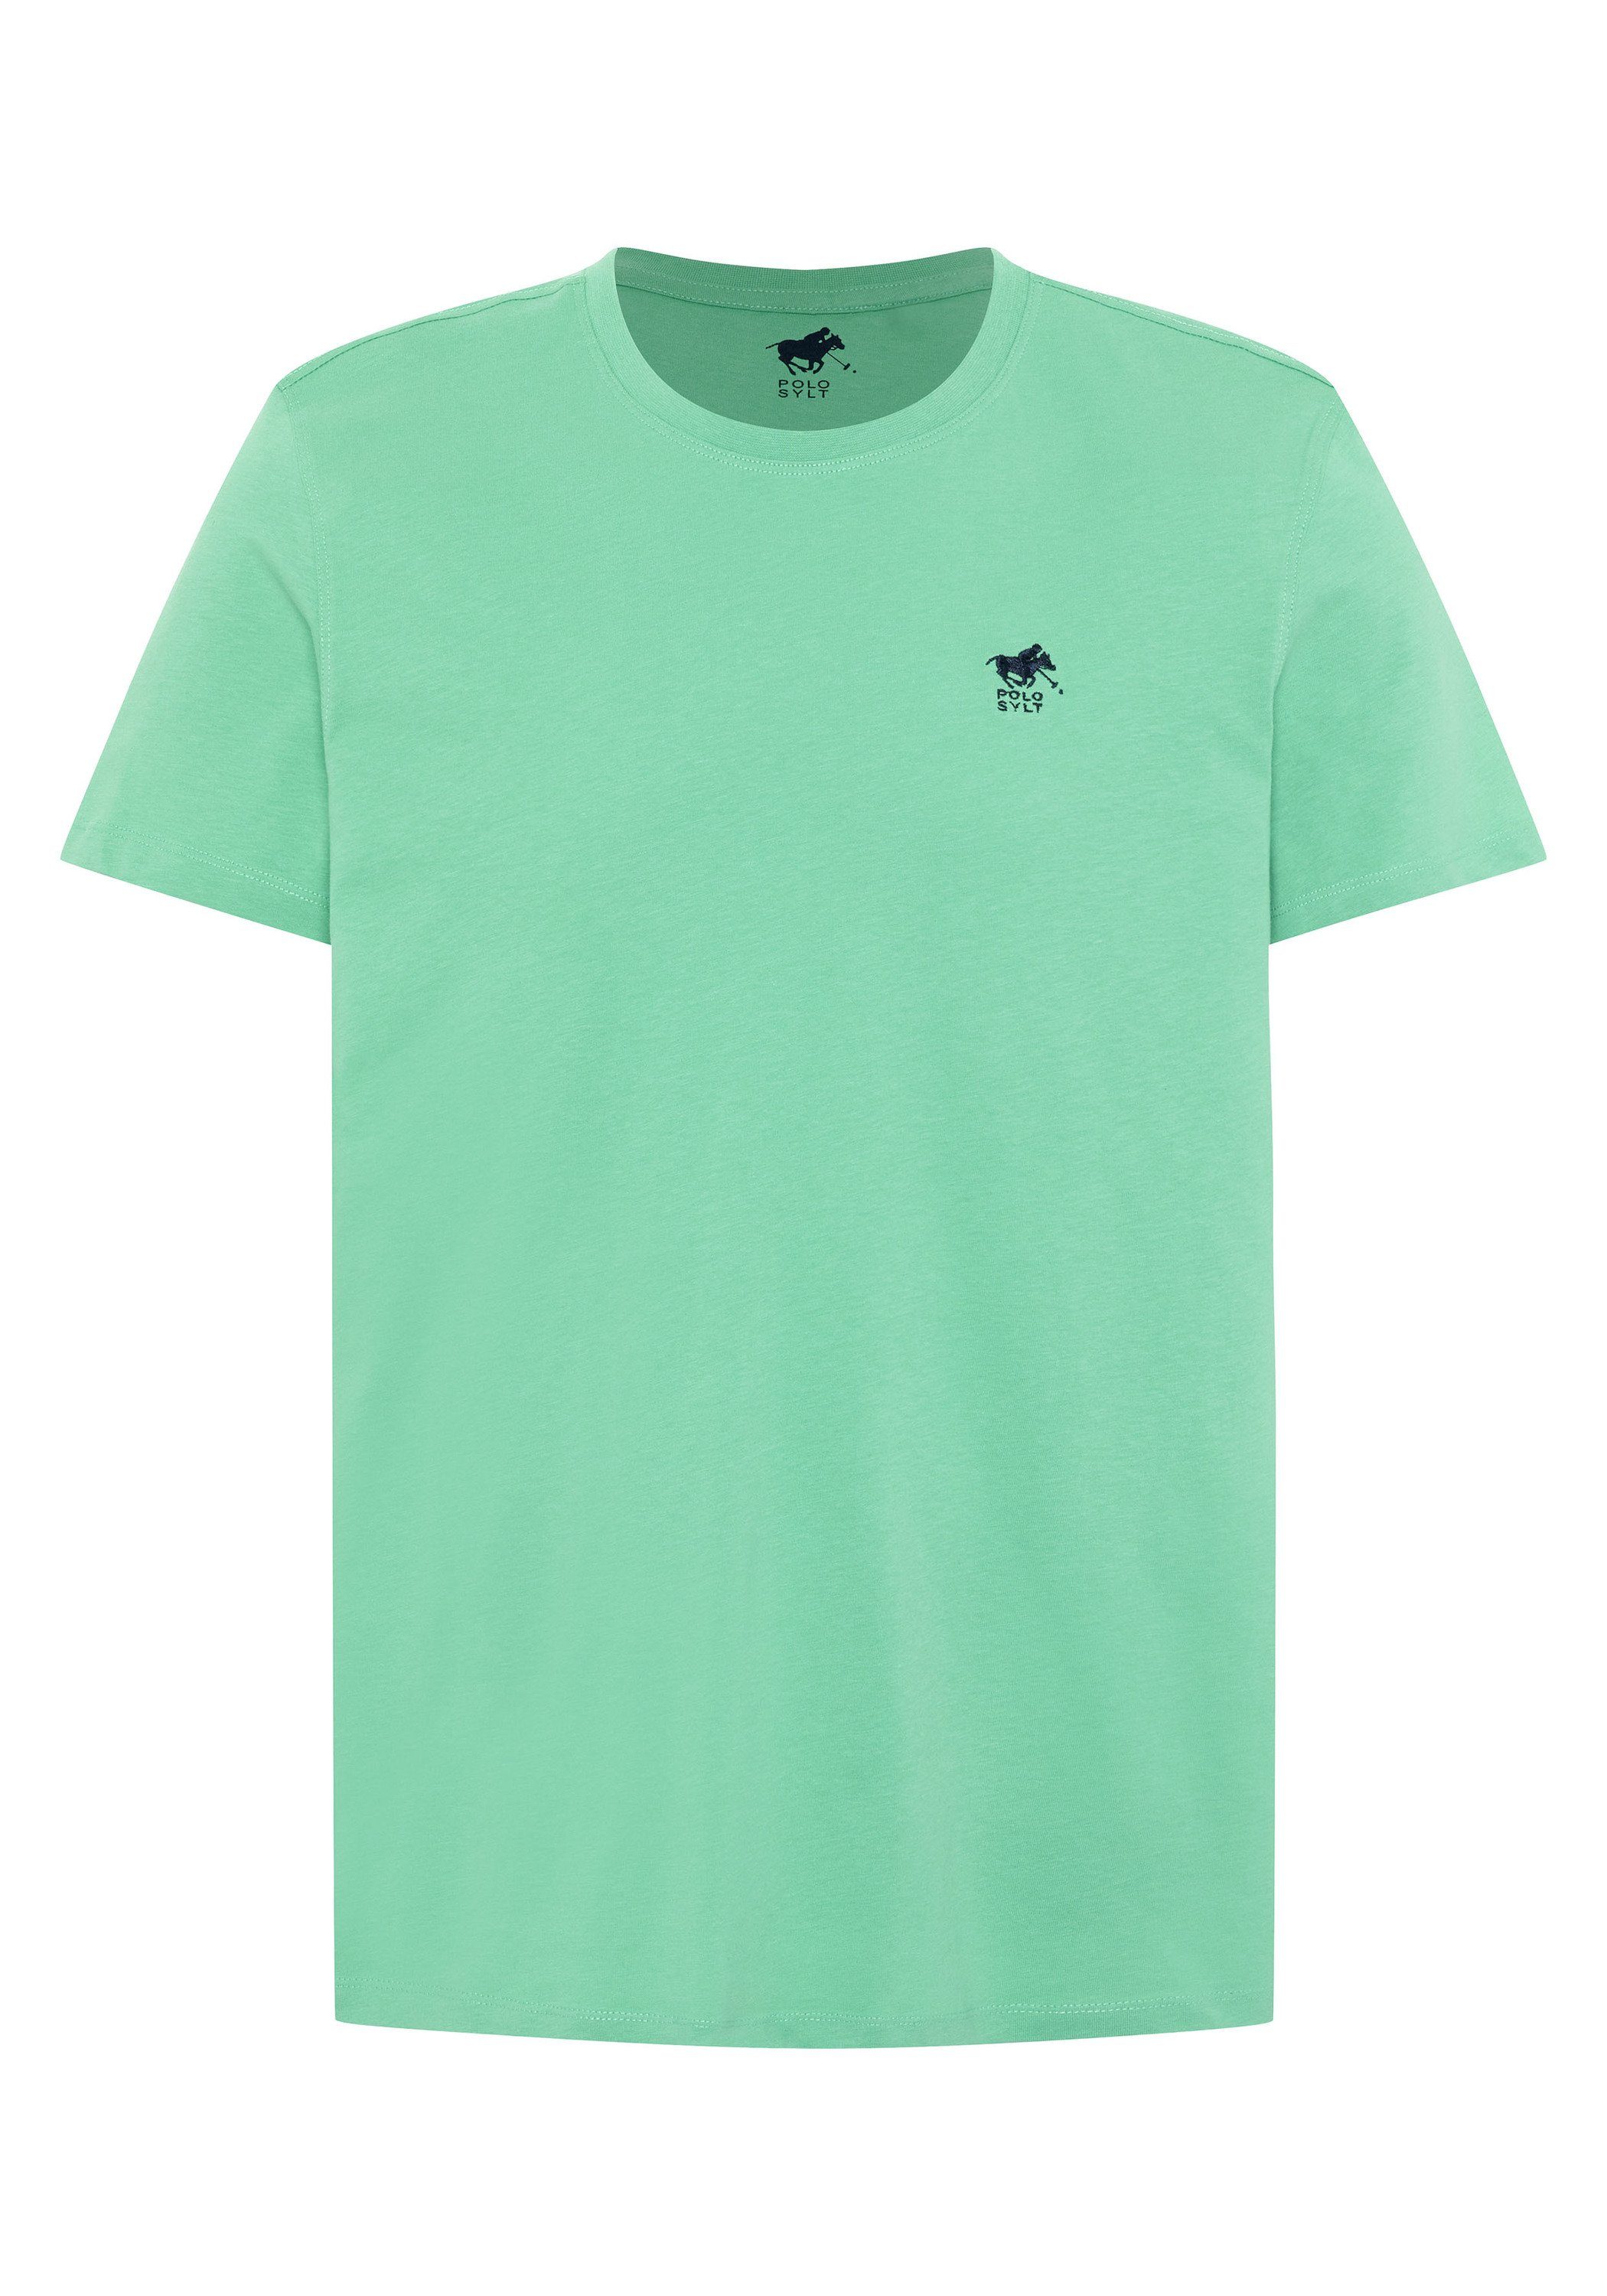 Polo Sylt Print-Shirt mit Print-Botschaft 16-5721 Marine Green